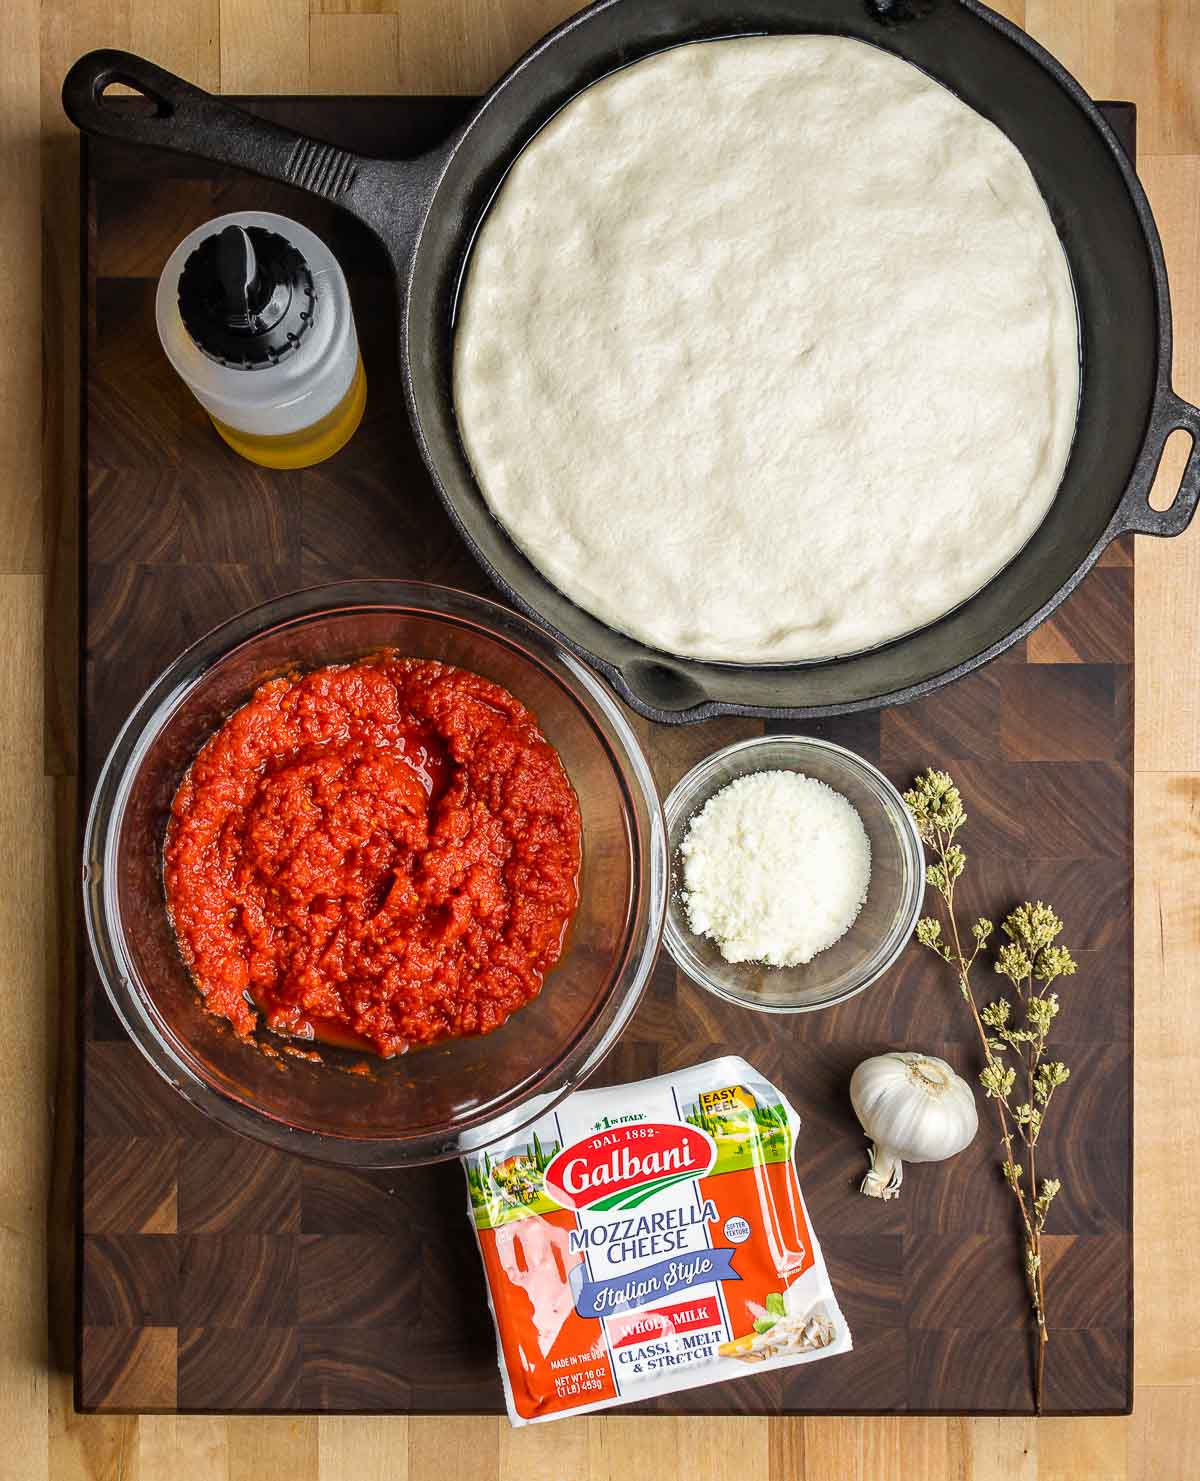 Ingredients shown: pizza dough in cast iron pan, olive oil. drained crushed tomatoes, Pecorino, mozzarella, garlic, and Sicilian oregano.